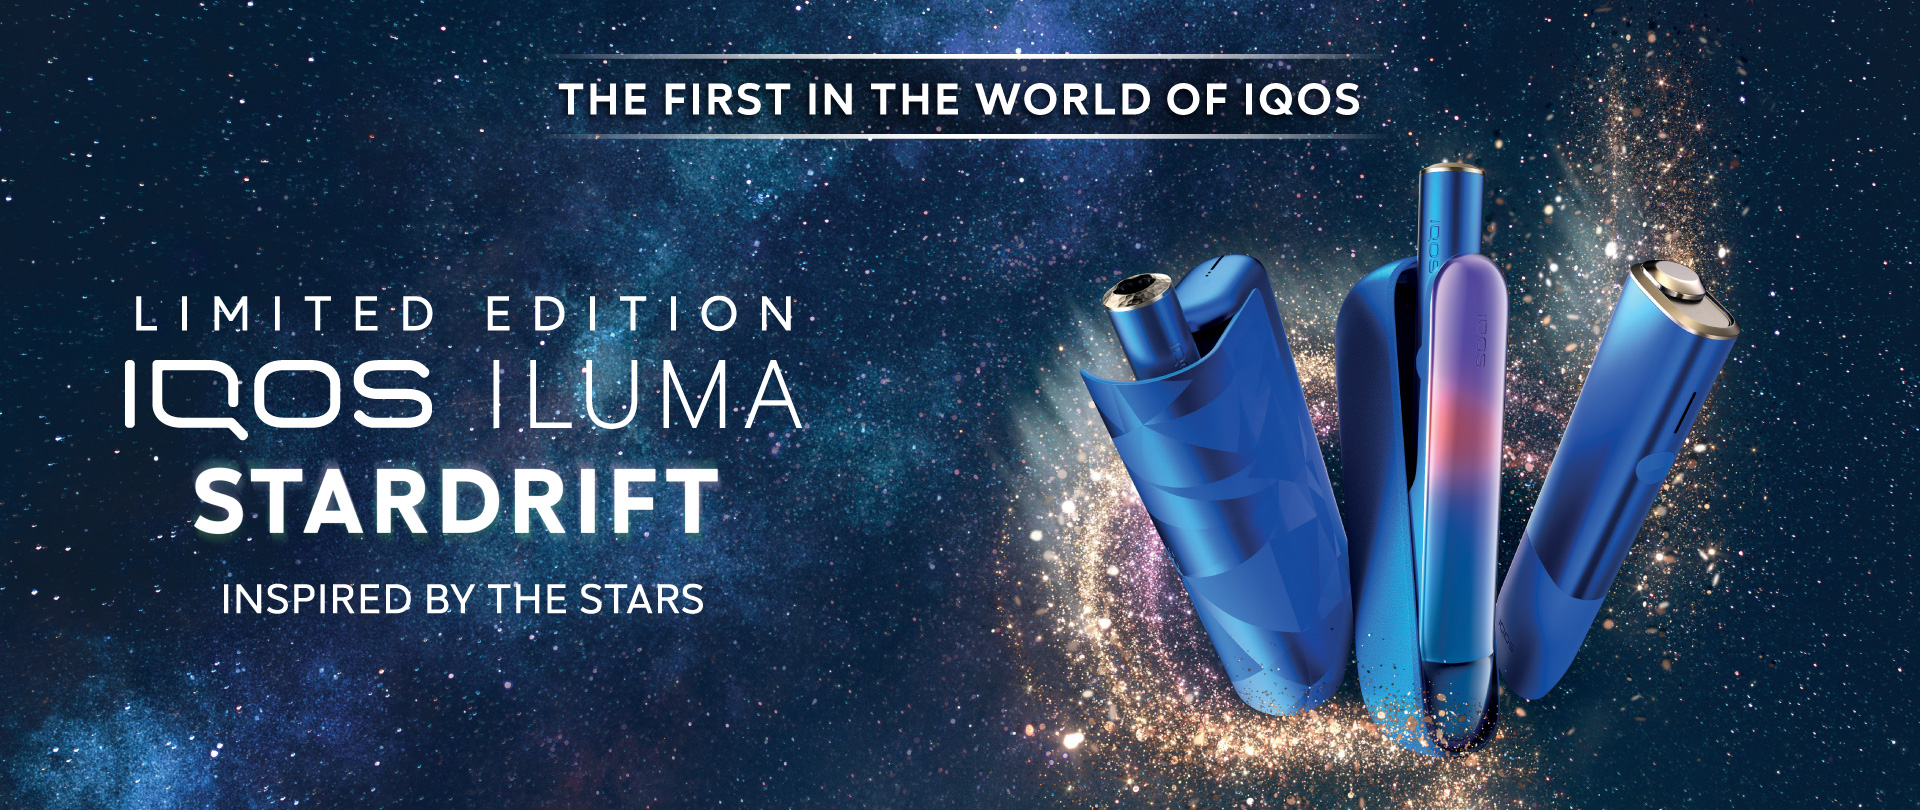 NEW Limited Edition IQOS ILUMA STARDRIFT Heated Tobacco Kit.